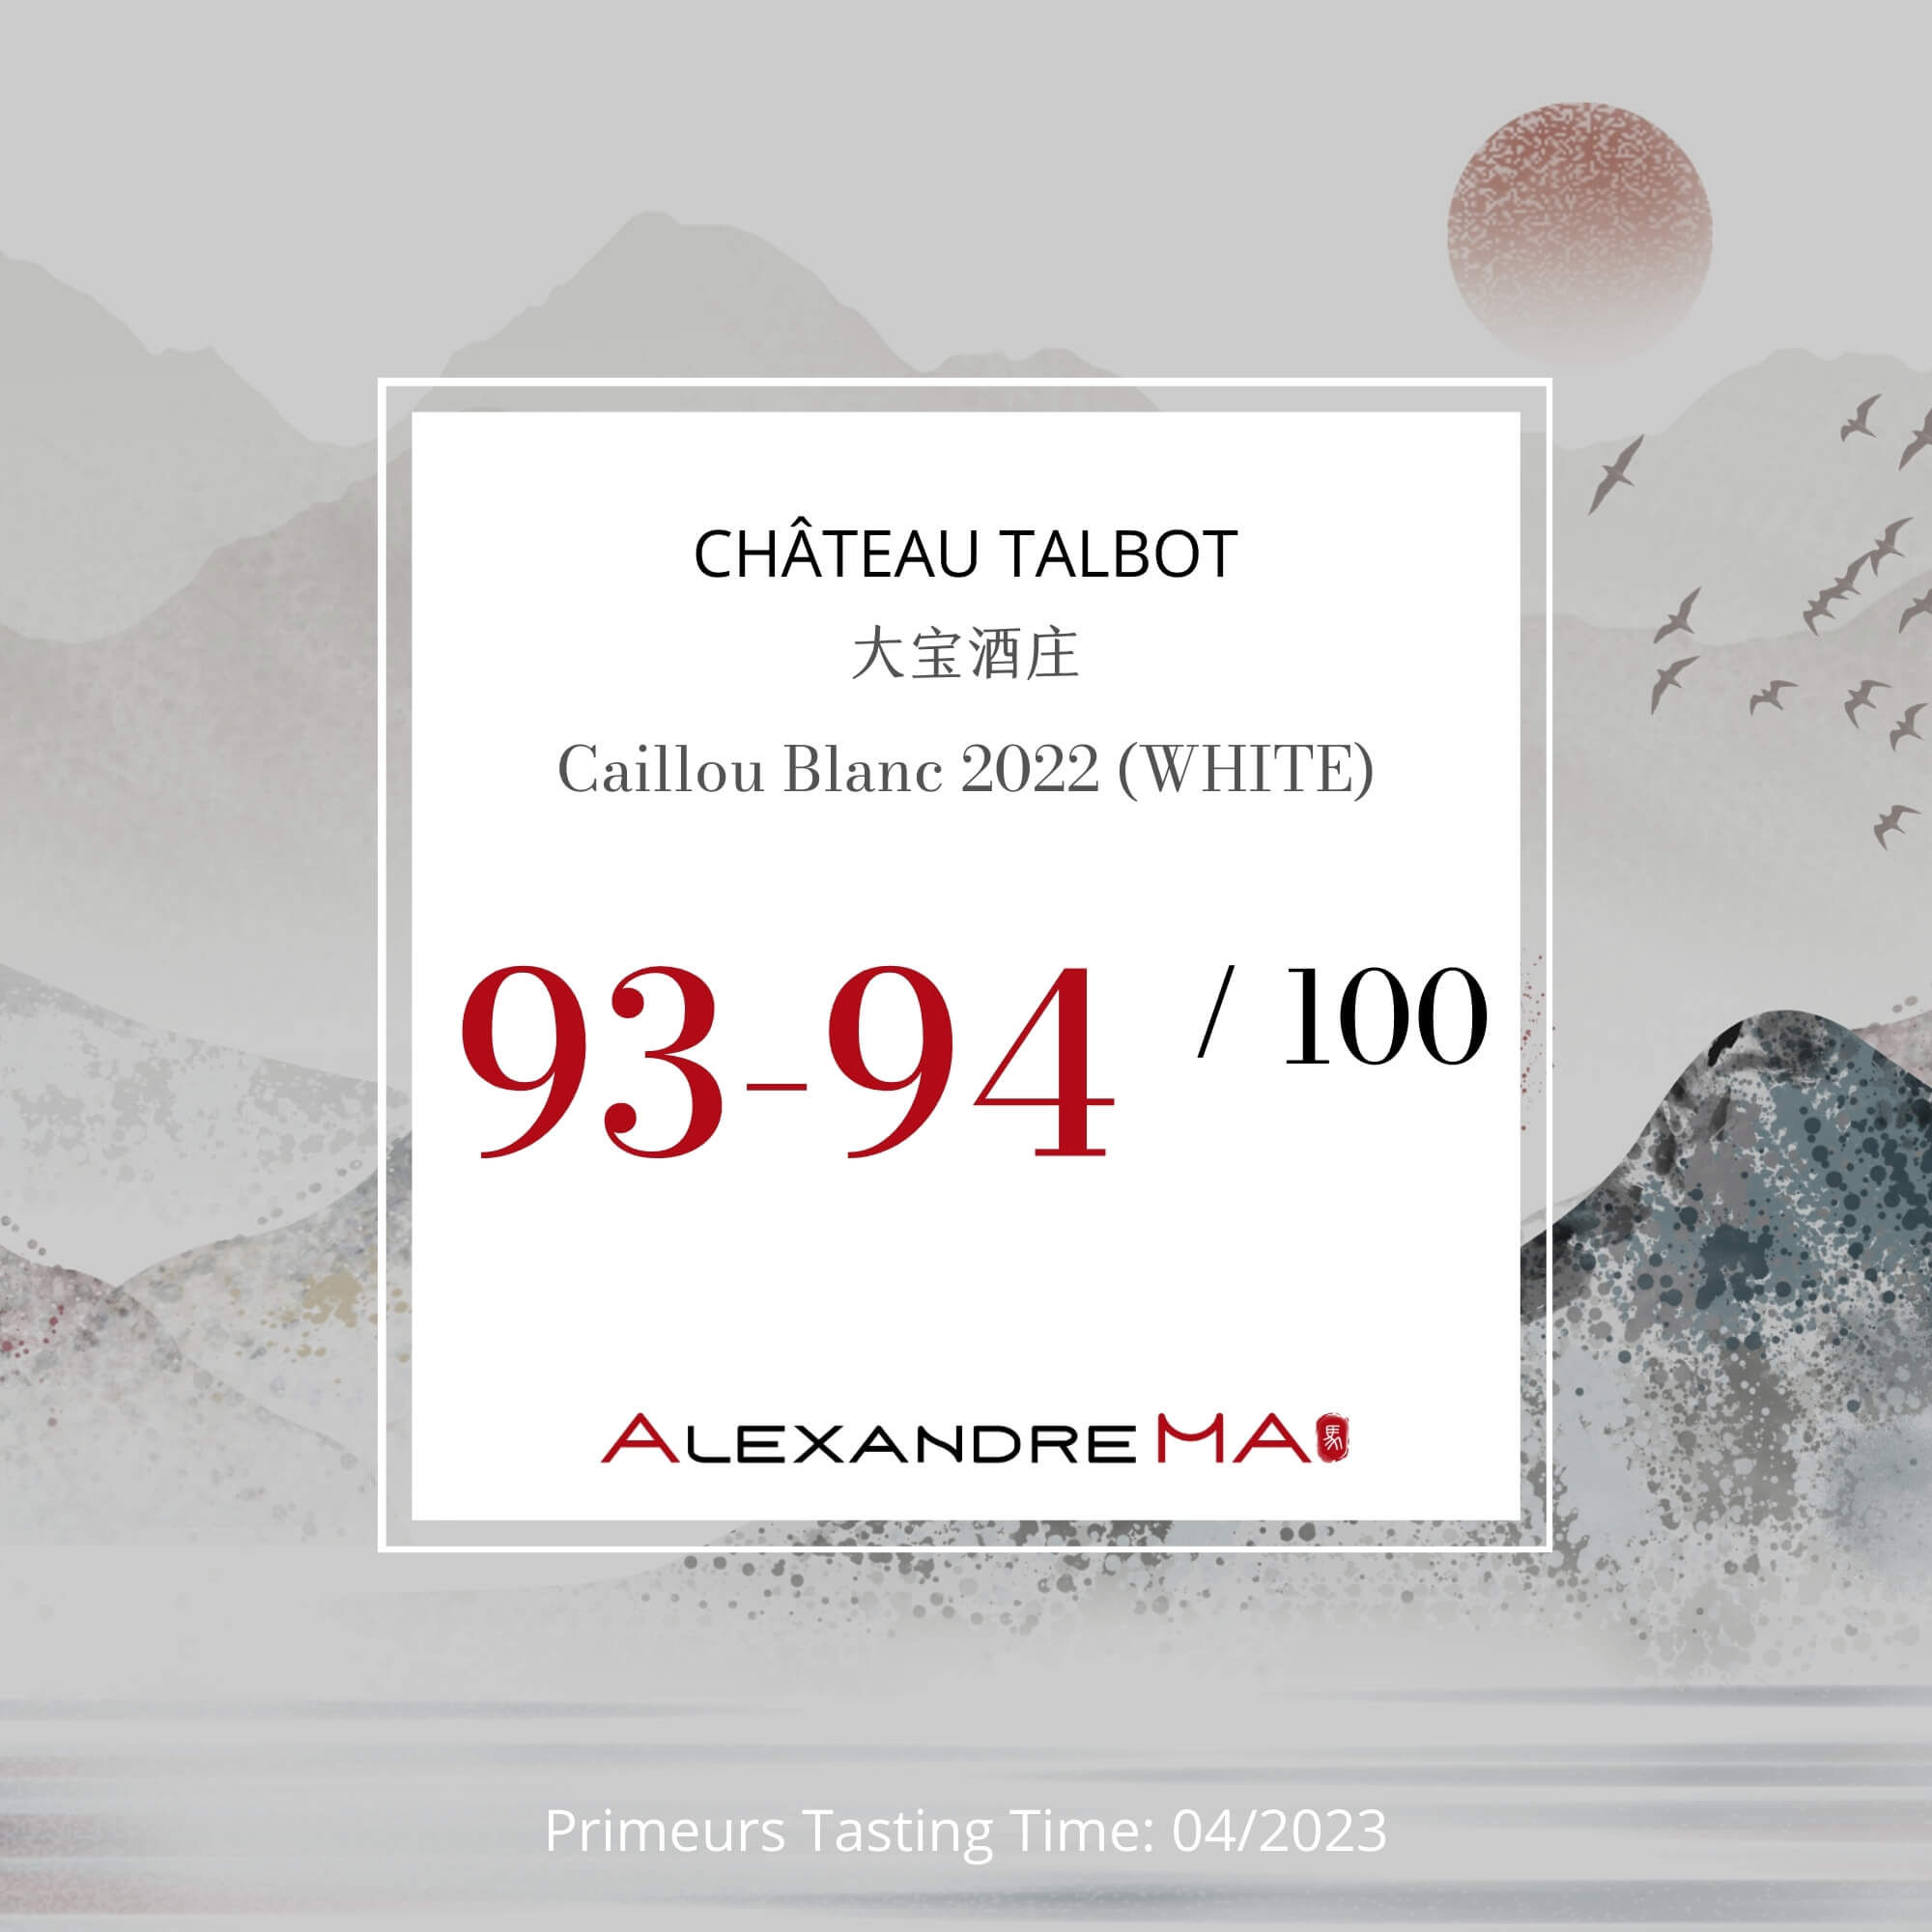 Château Talbot-Caillou Blanc 2022-White Primeurs - Alexandre MA